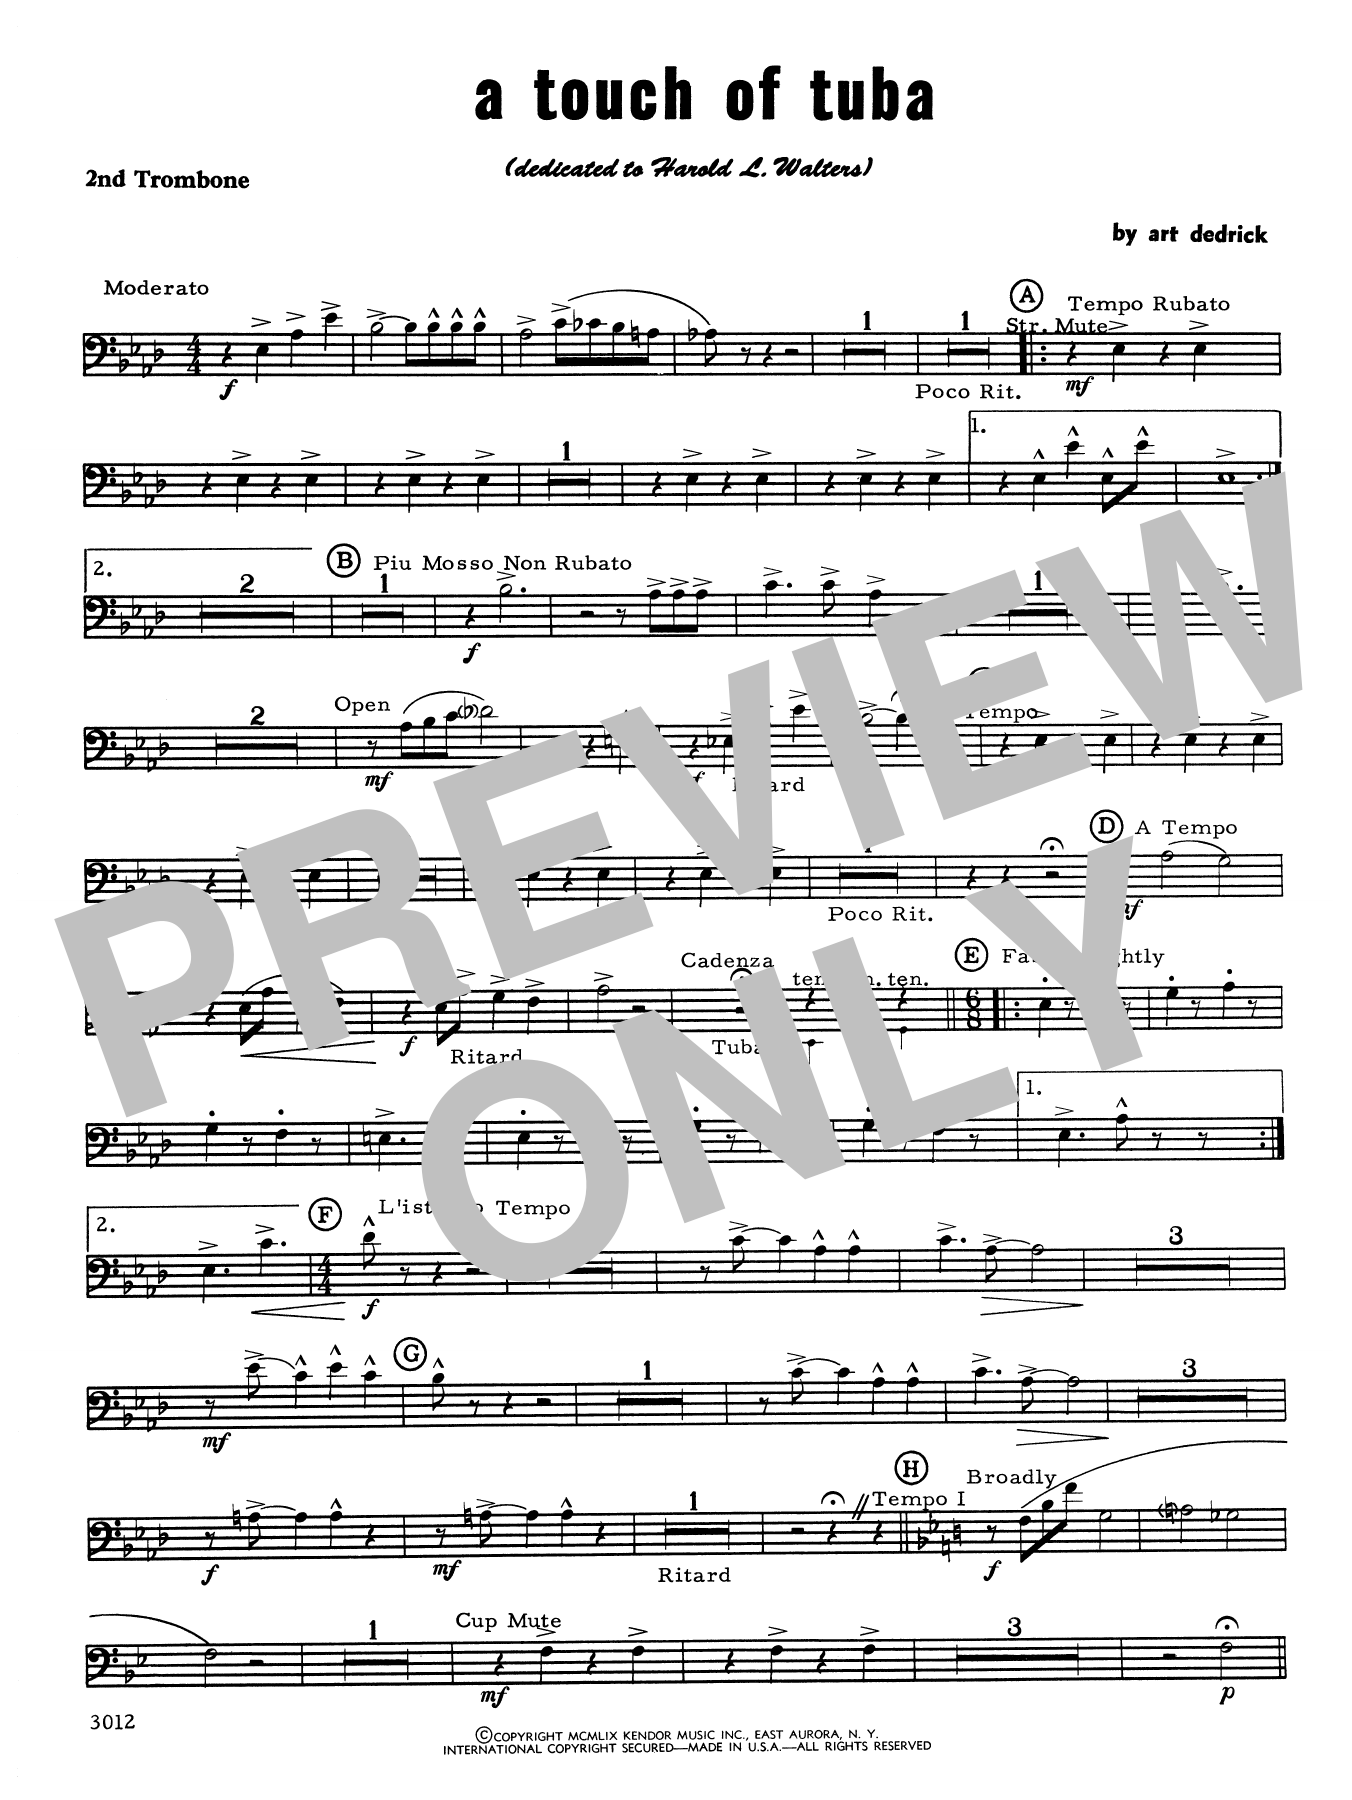 Download Art Dedrick A Touch Of Tuba - 2nd Trombone Sheet Music